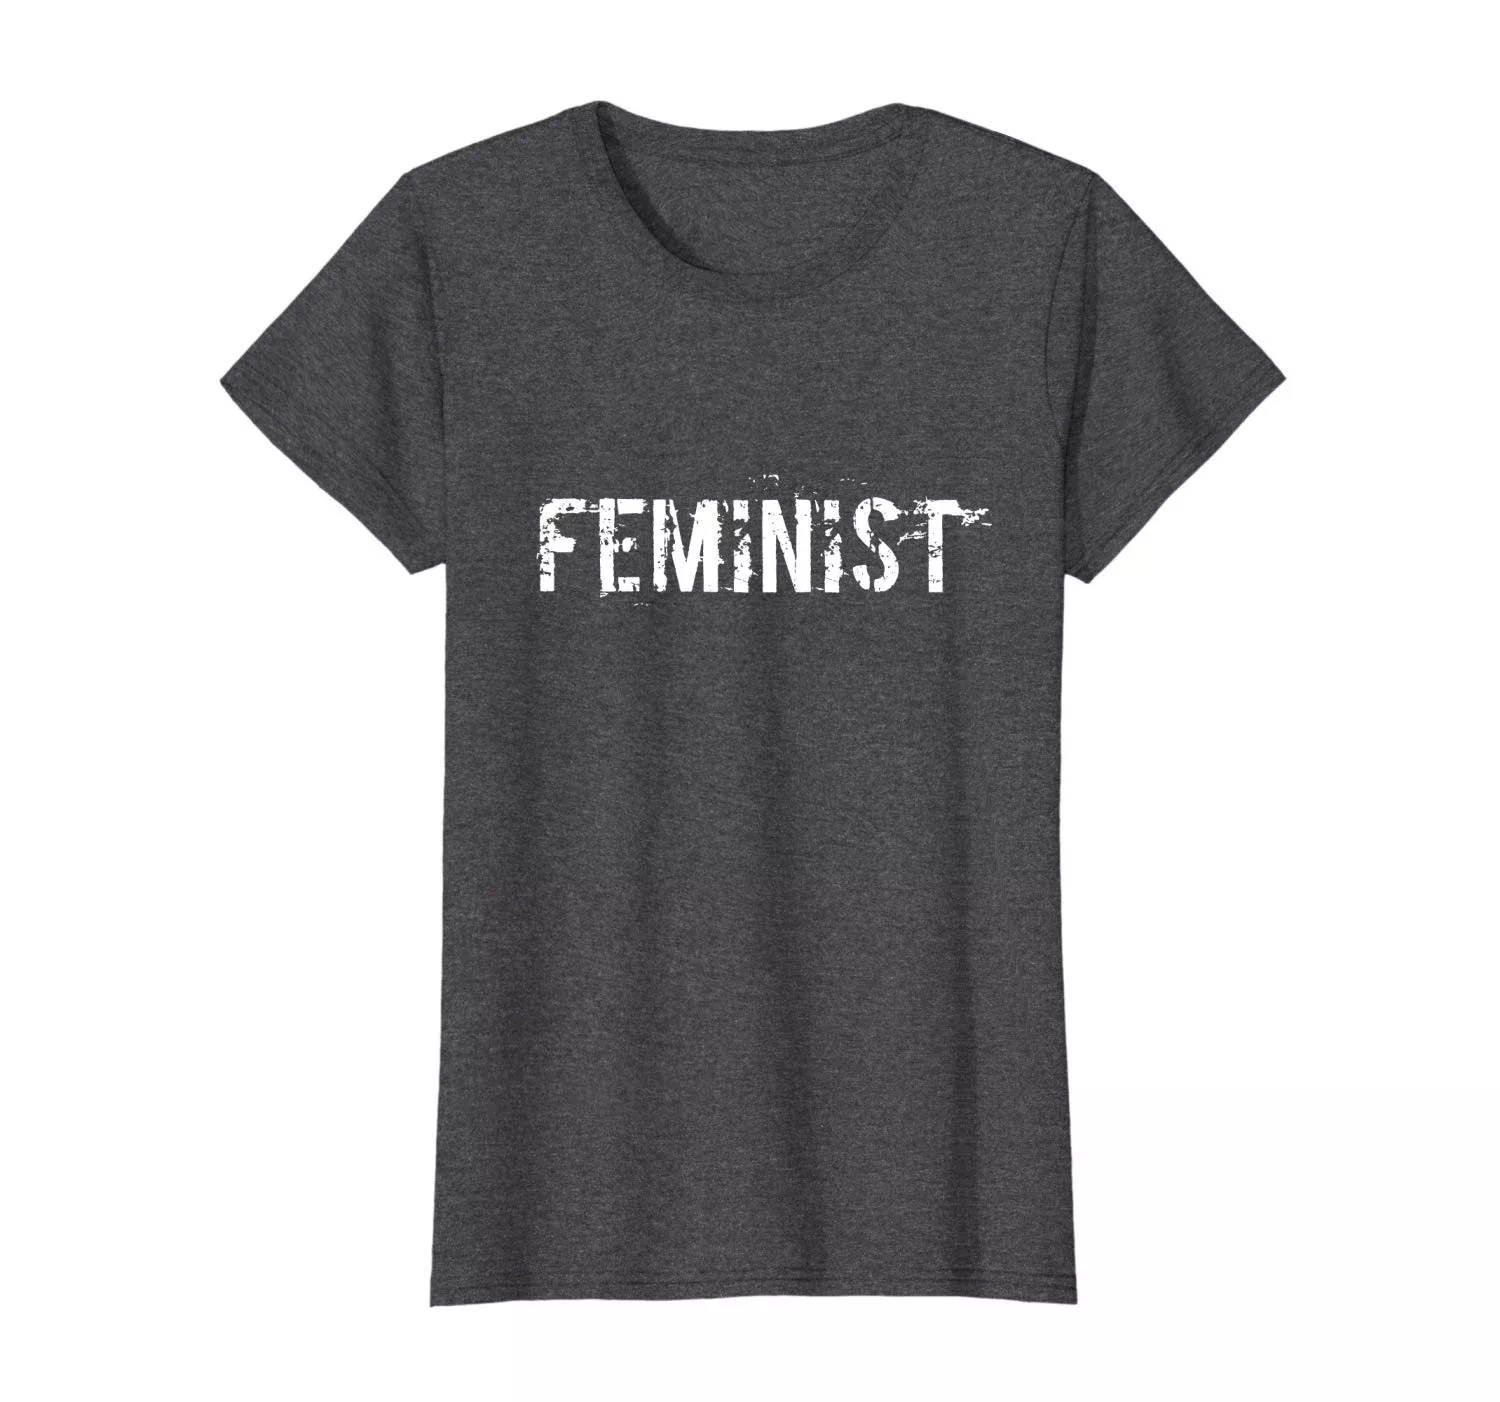 Best Friend Gift Ideas 2023: The Feminist Tee 2023